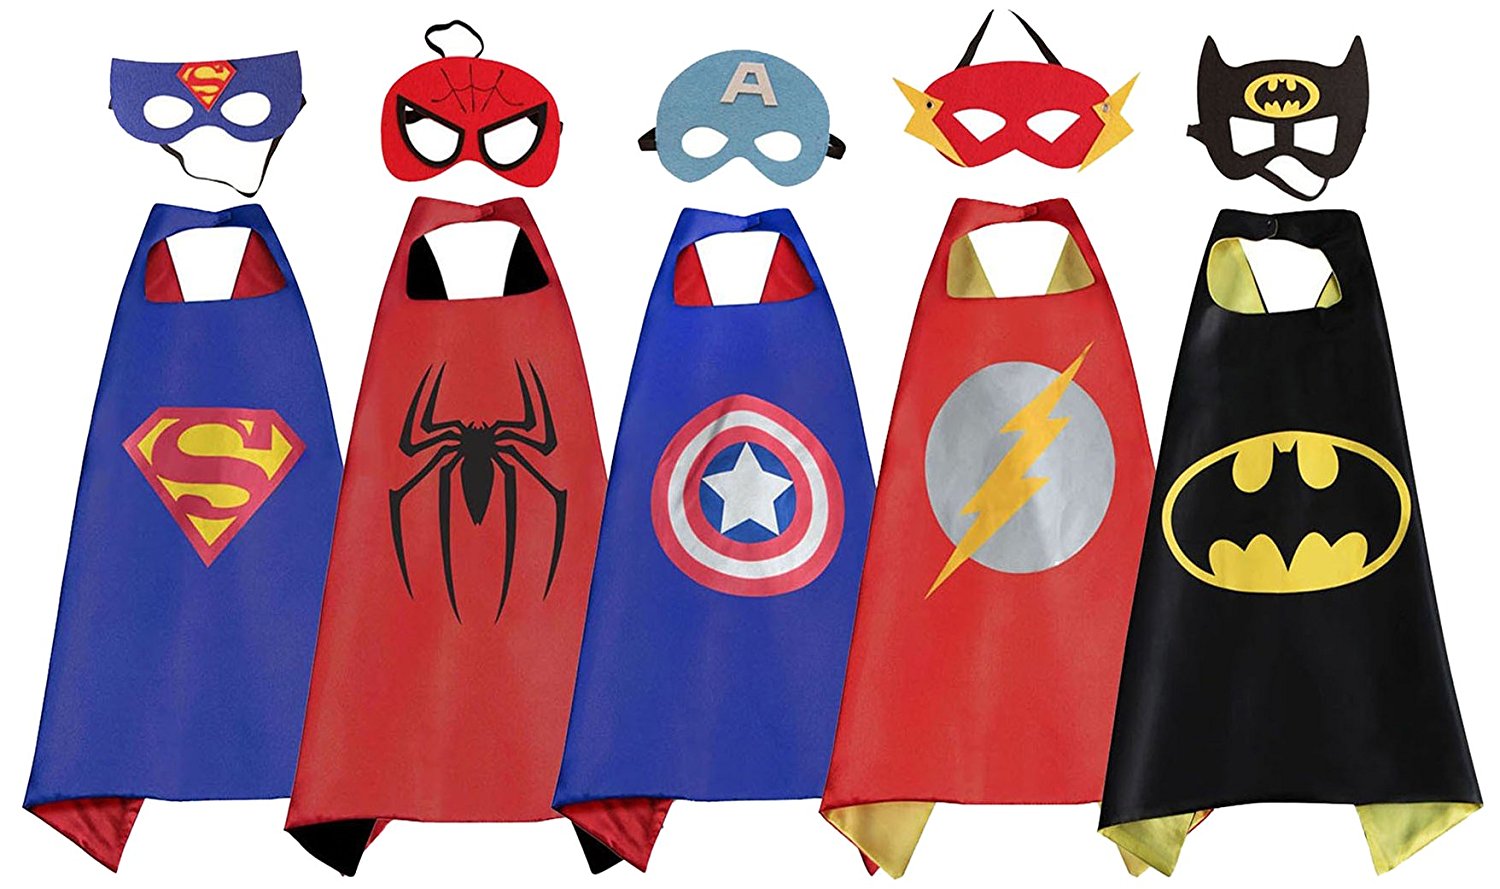 5 Super Hero Dress Up Costumes – Satin Capes with Felt Masks – Just $17.95!